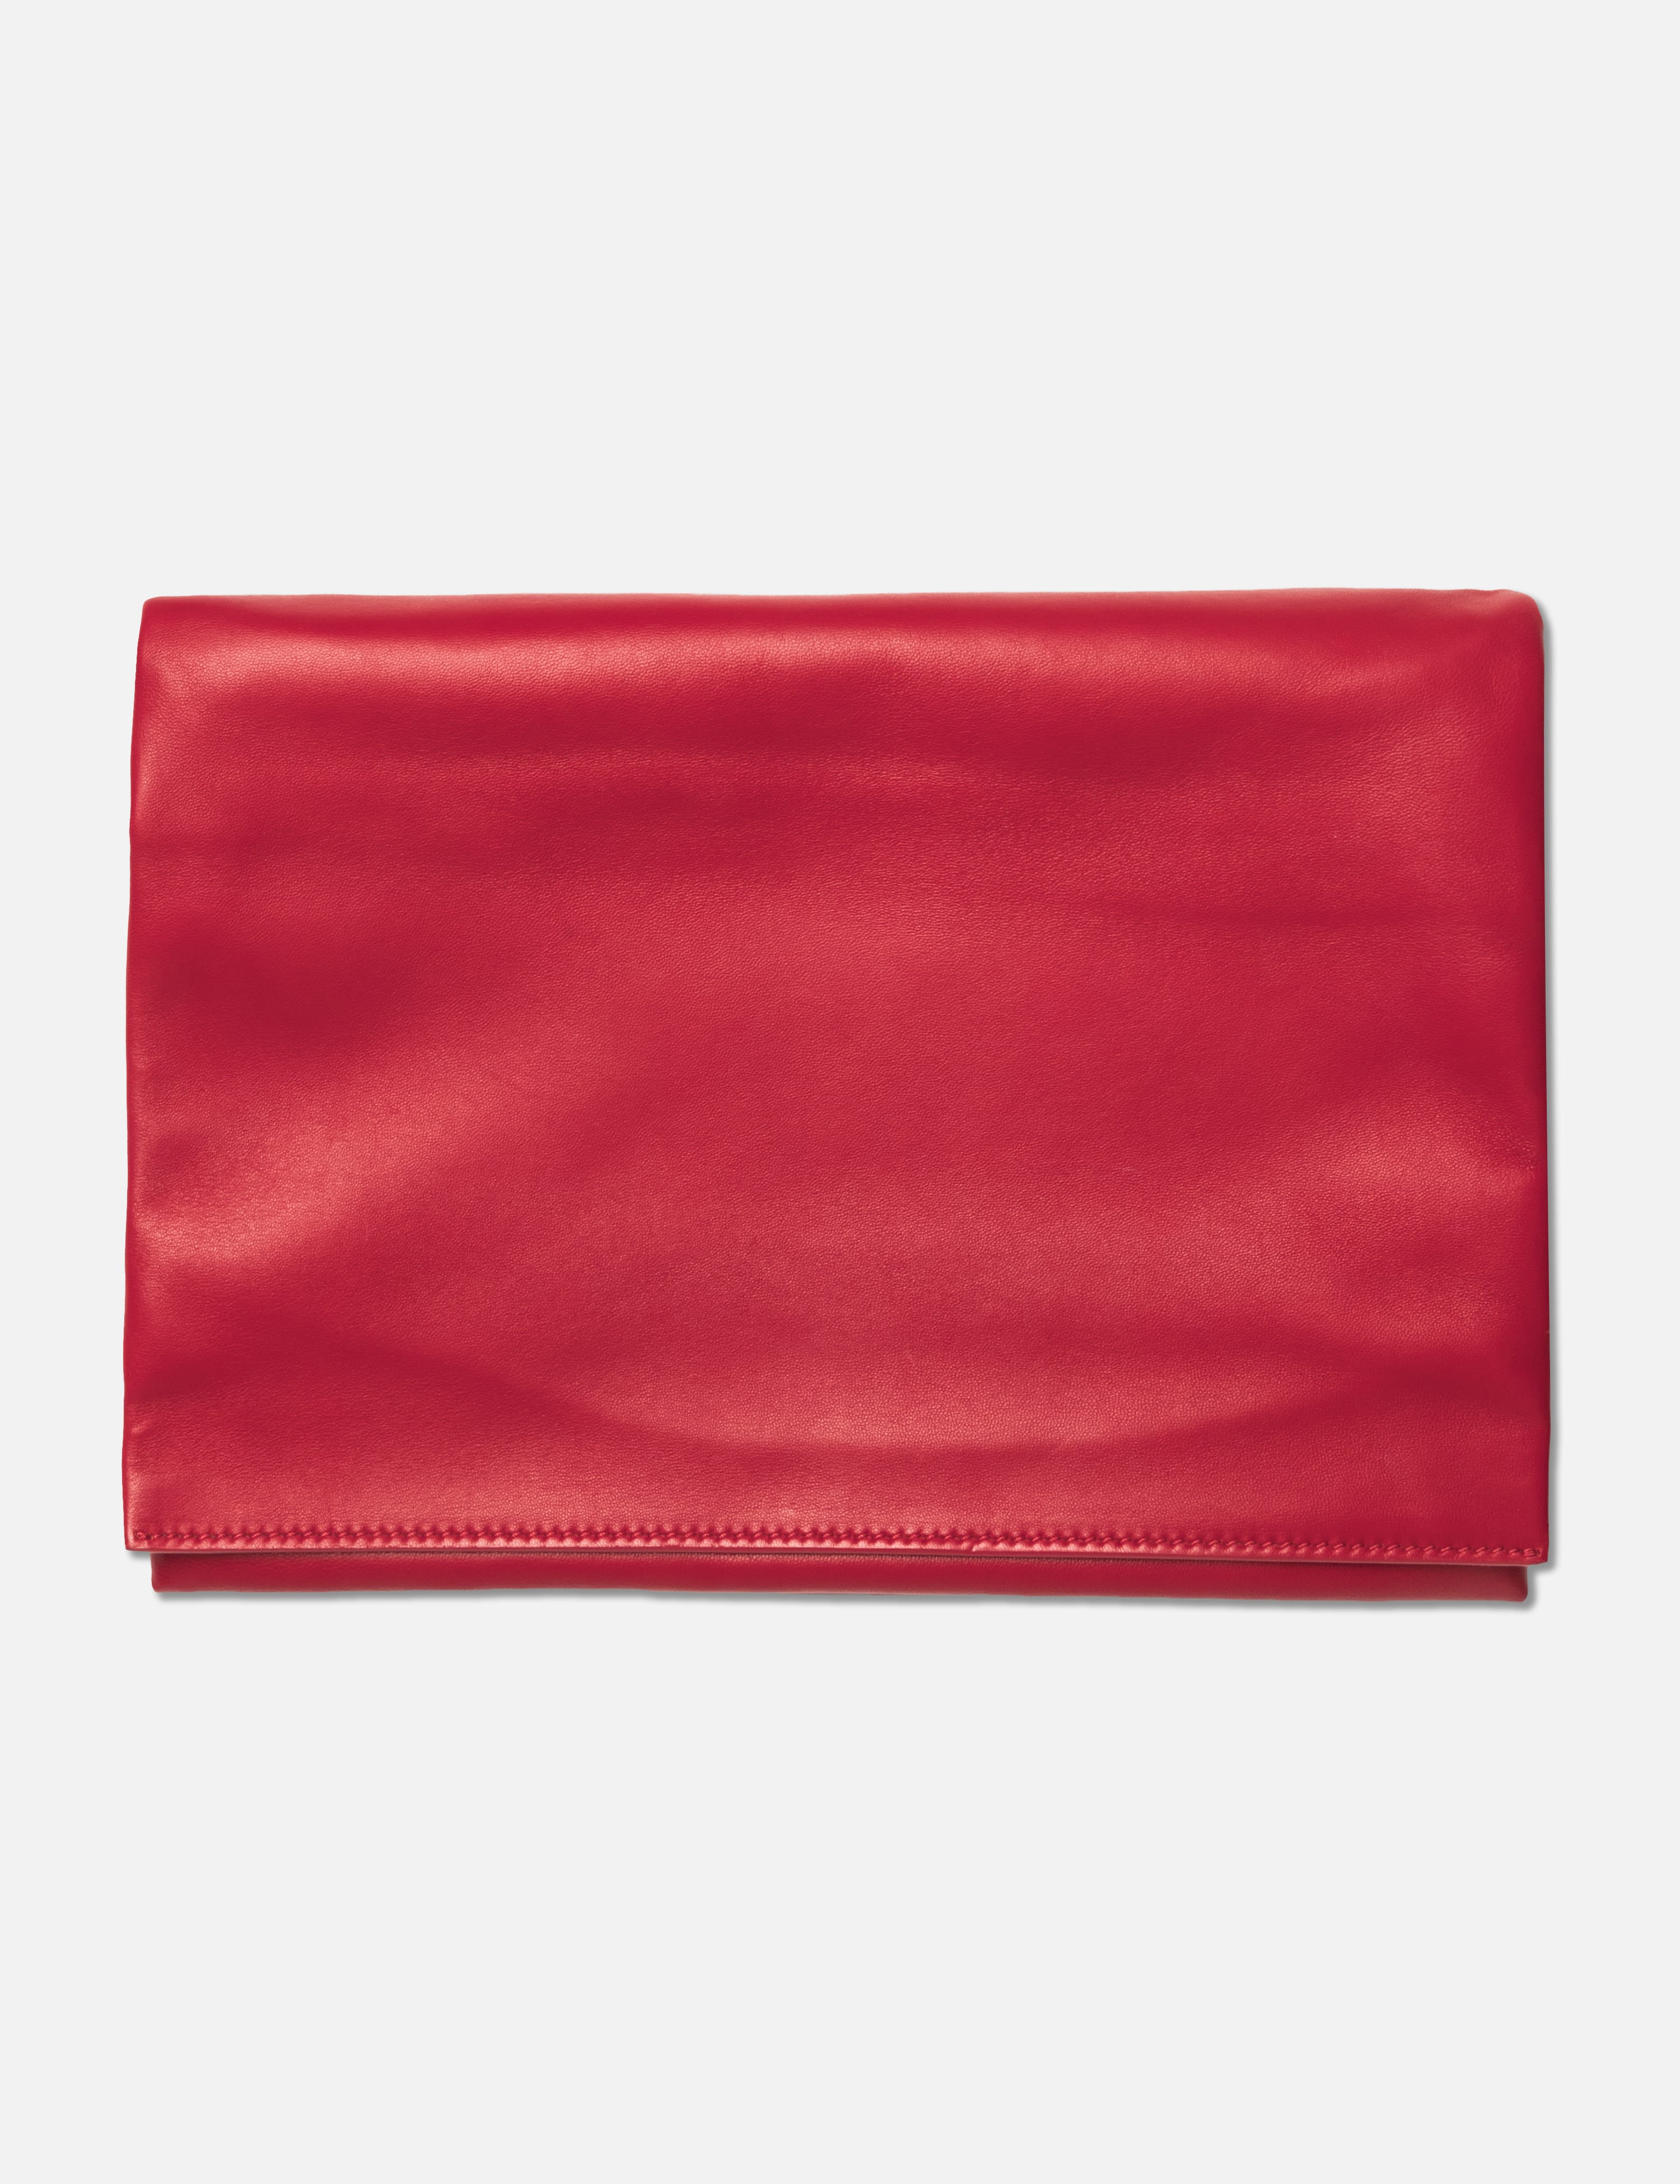 CELINE Clutch Bag Beige Leather Macadam Pattern M06 Made in Italy | eBay